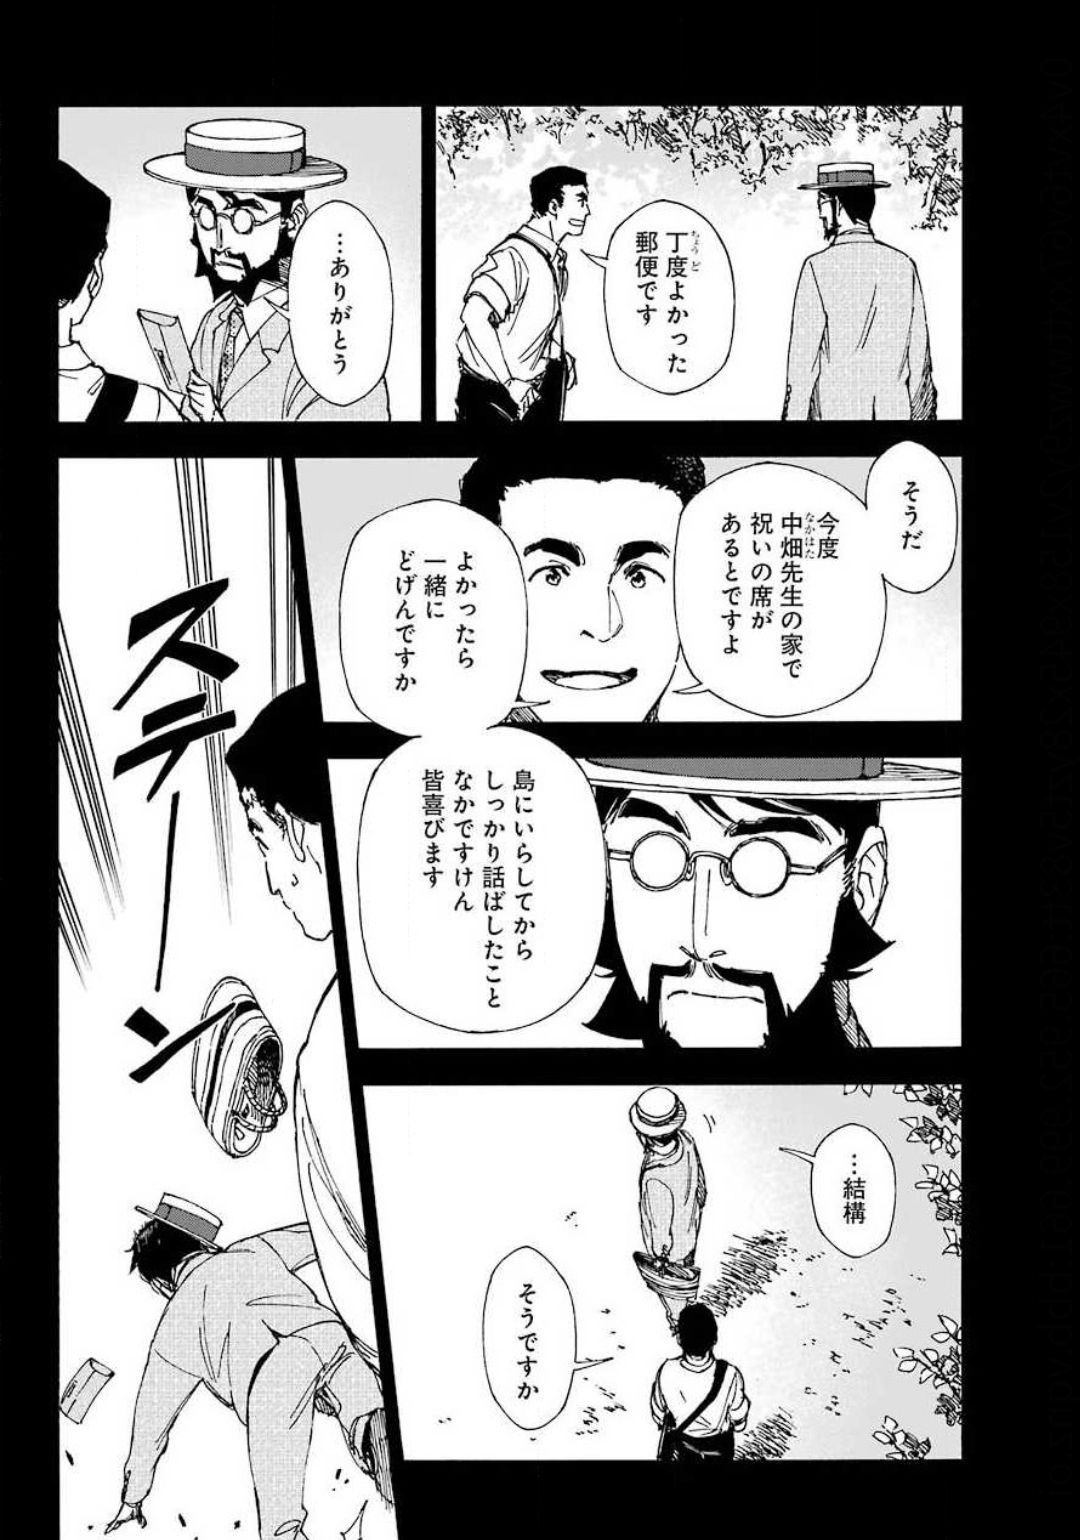 Hotomeku-kakashi - Chapter 07-1 - Page 4